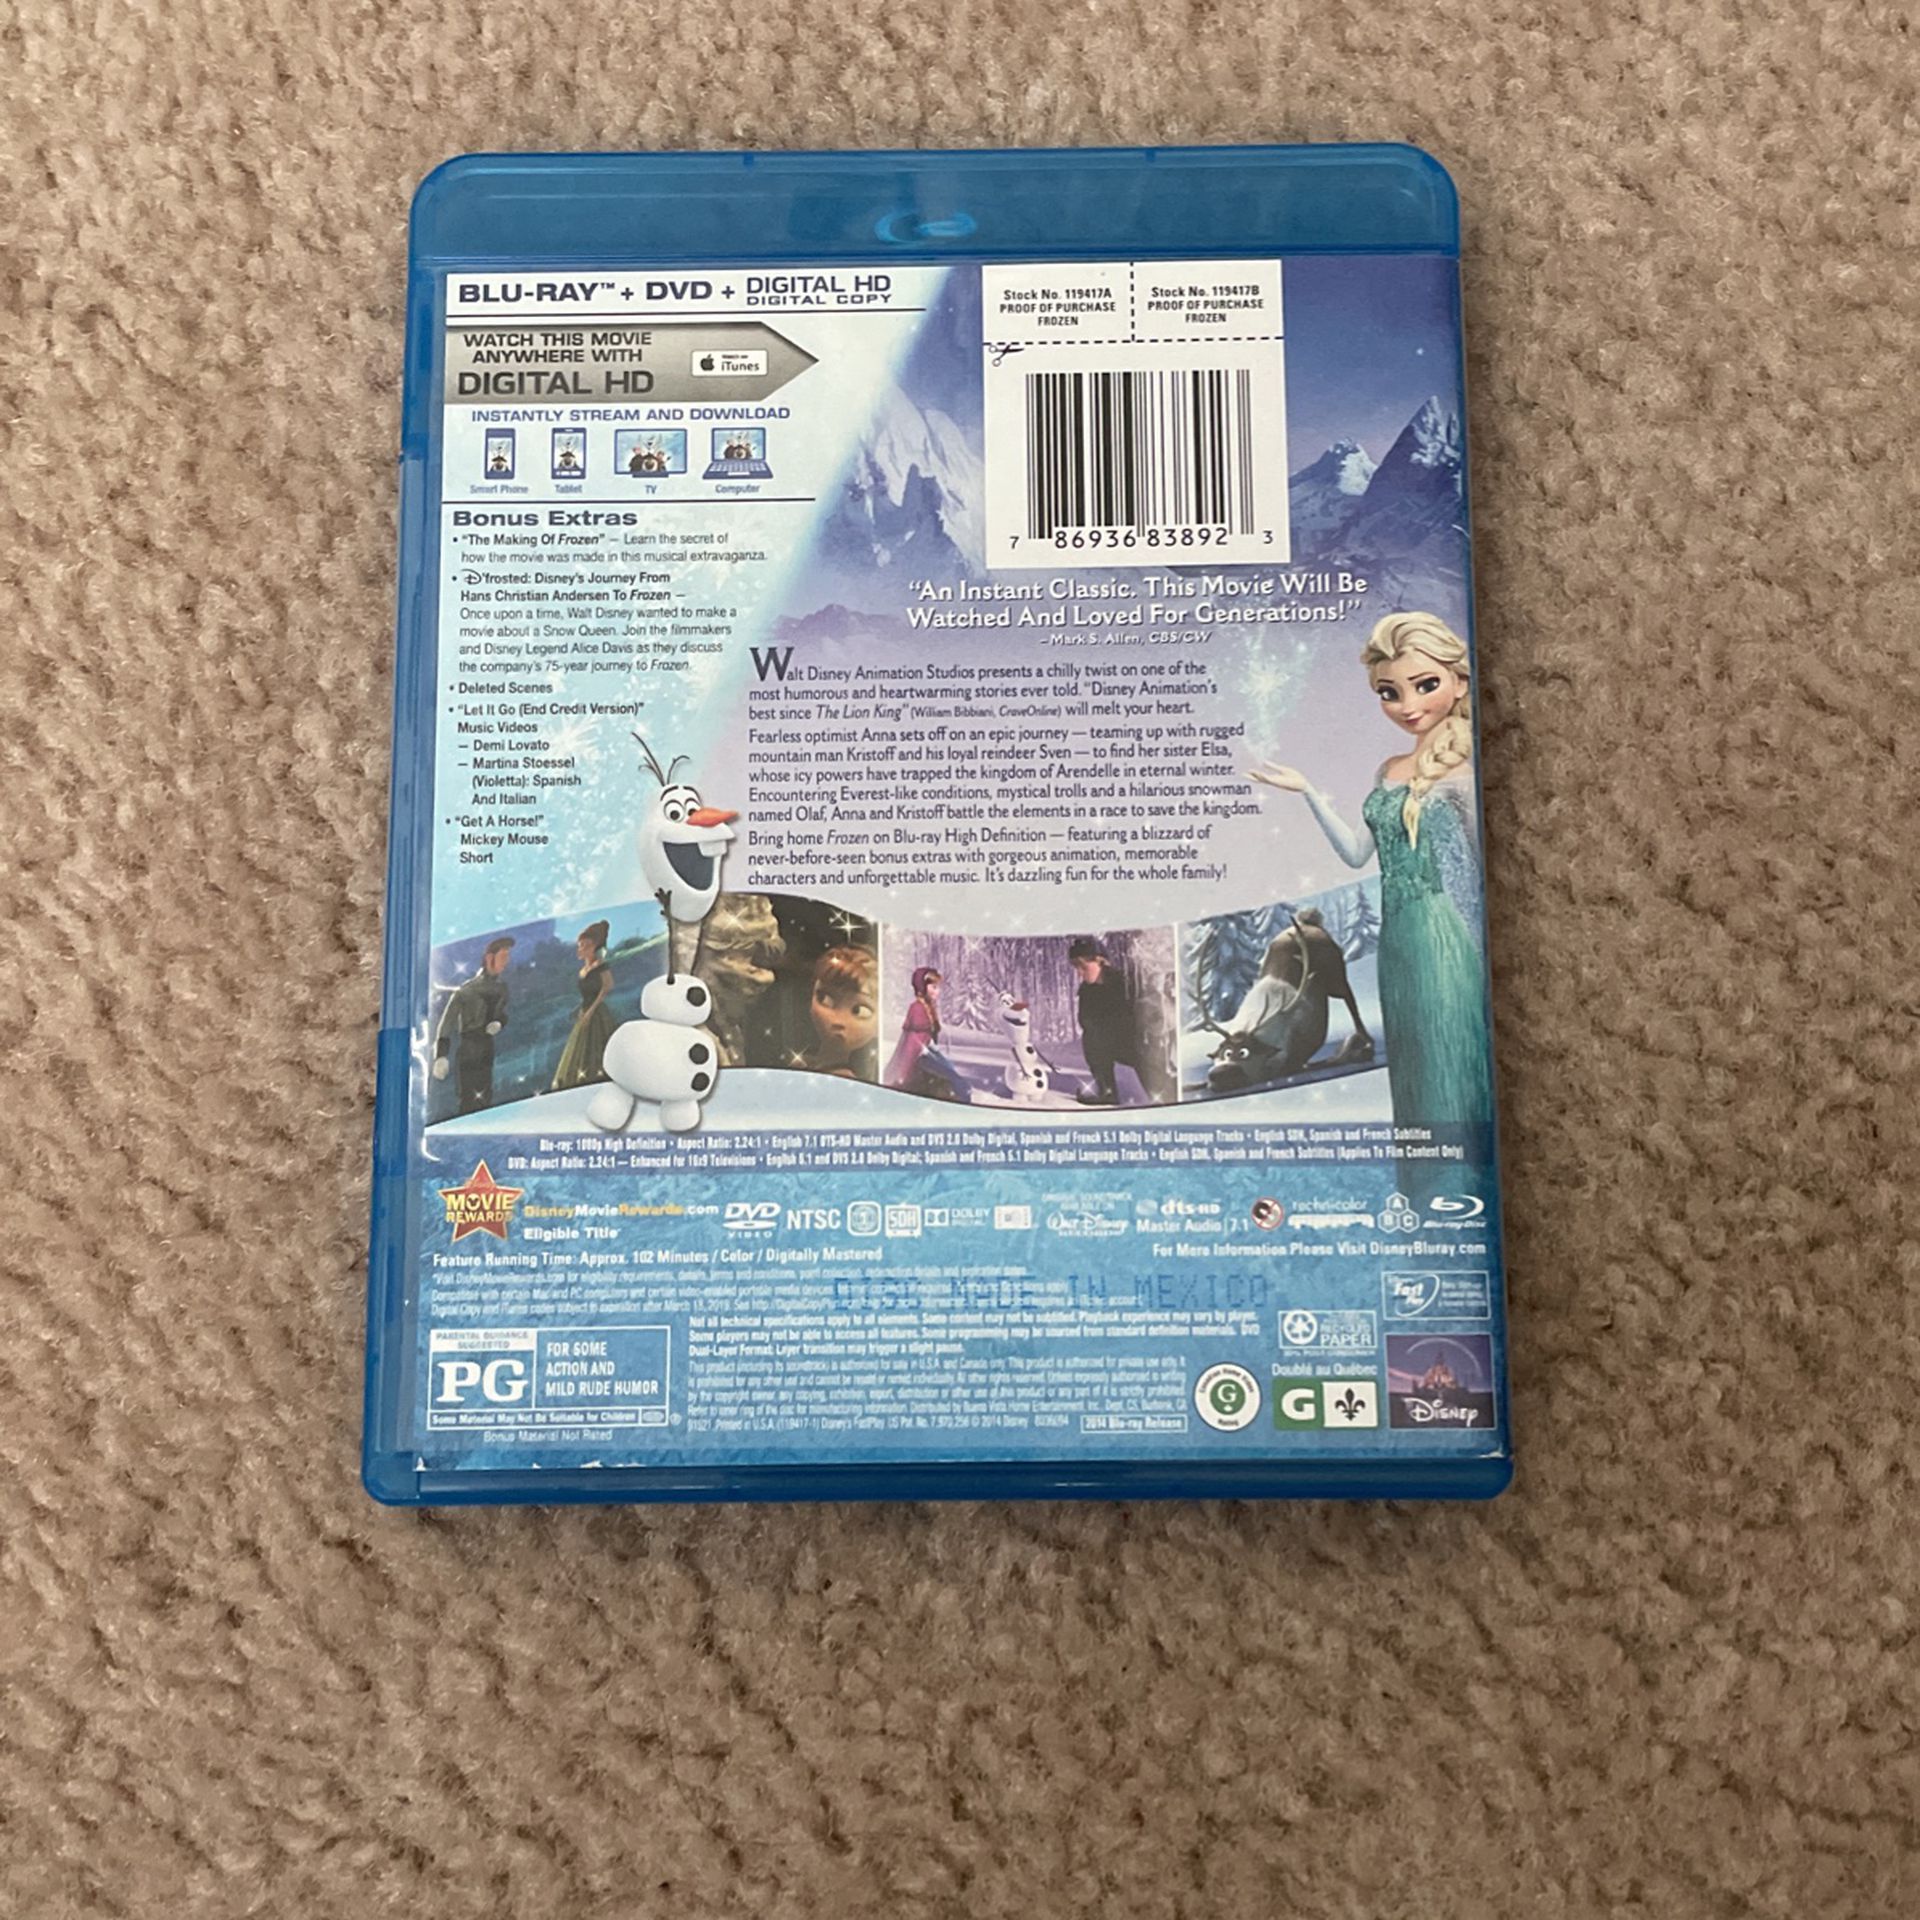 Disney Frozen Blu-ray 